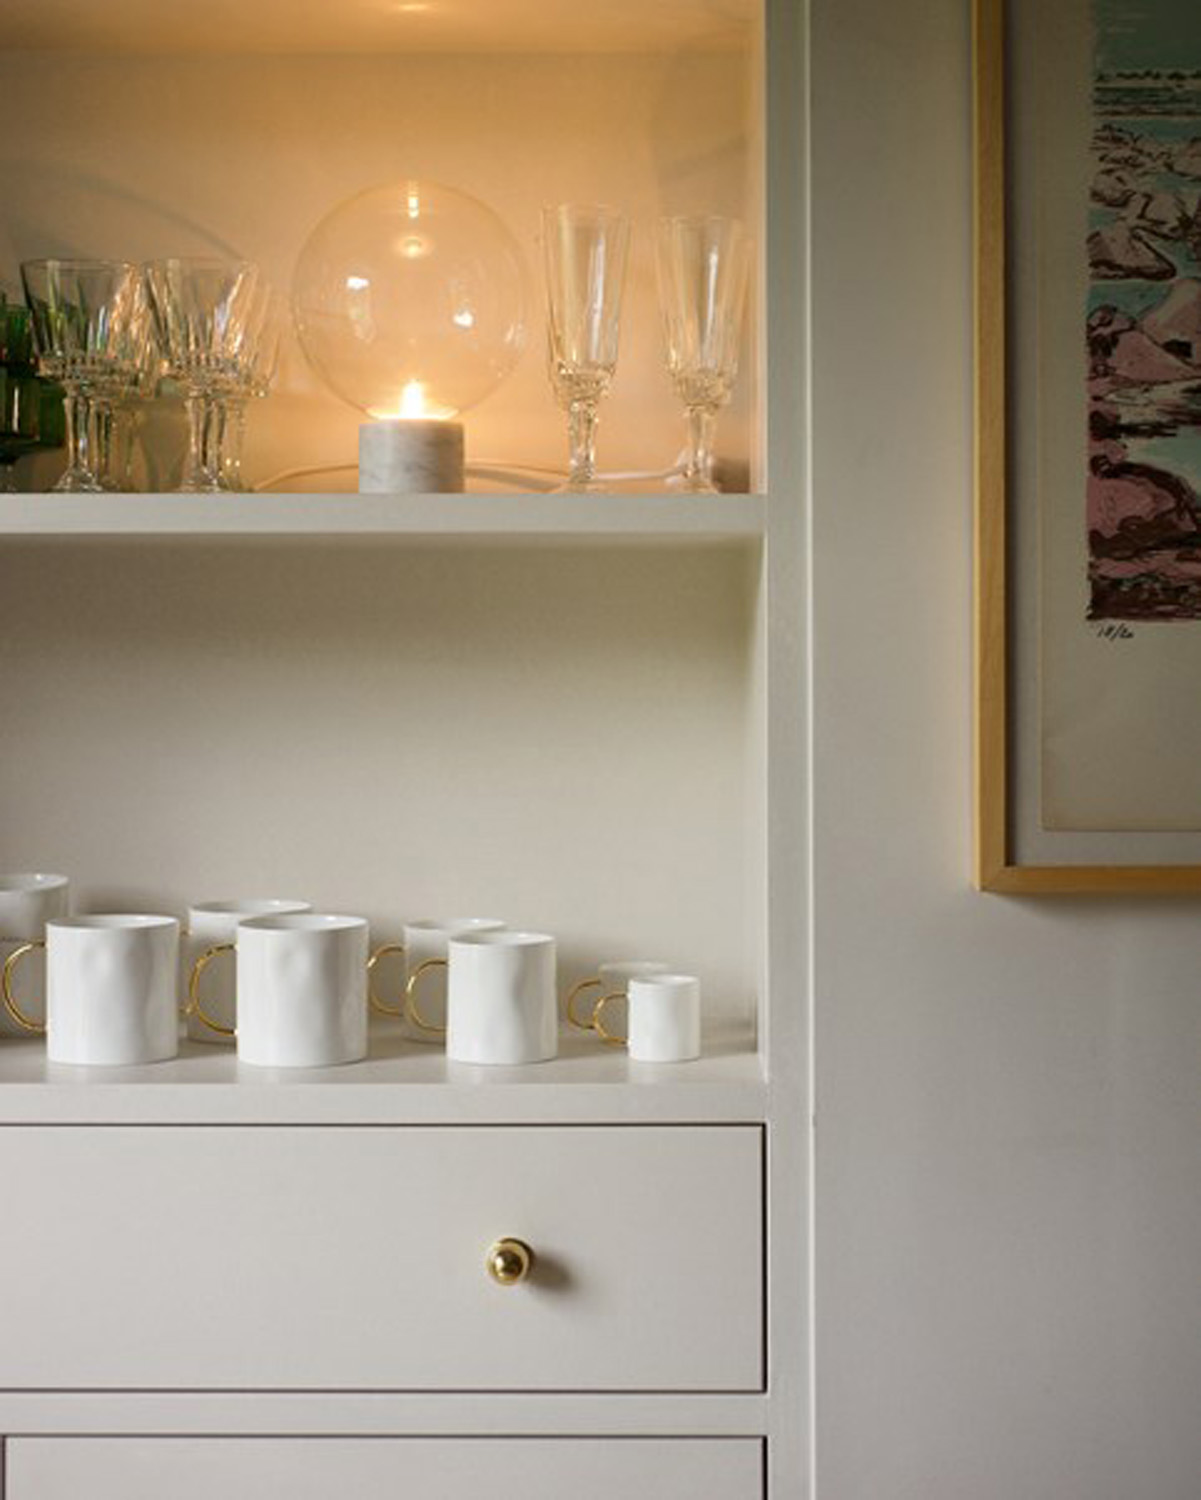 Cupboard by Feldspar artisinal ceramics handmade in the UK